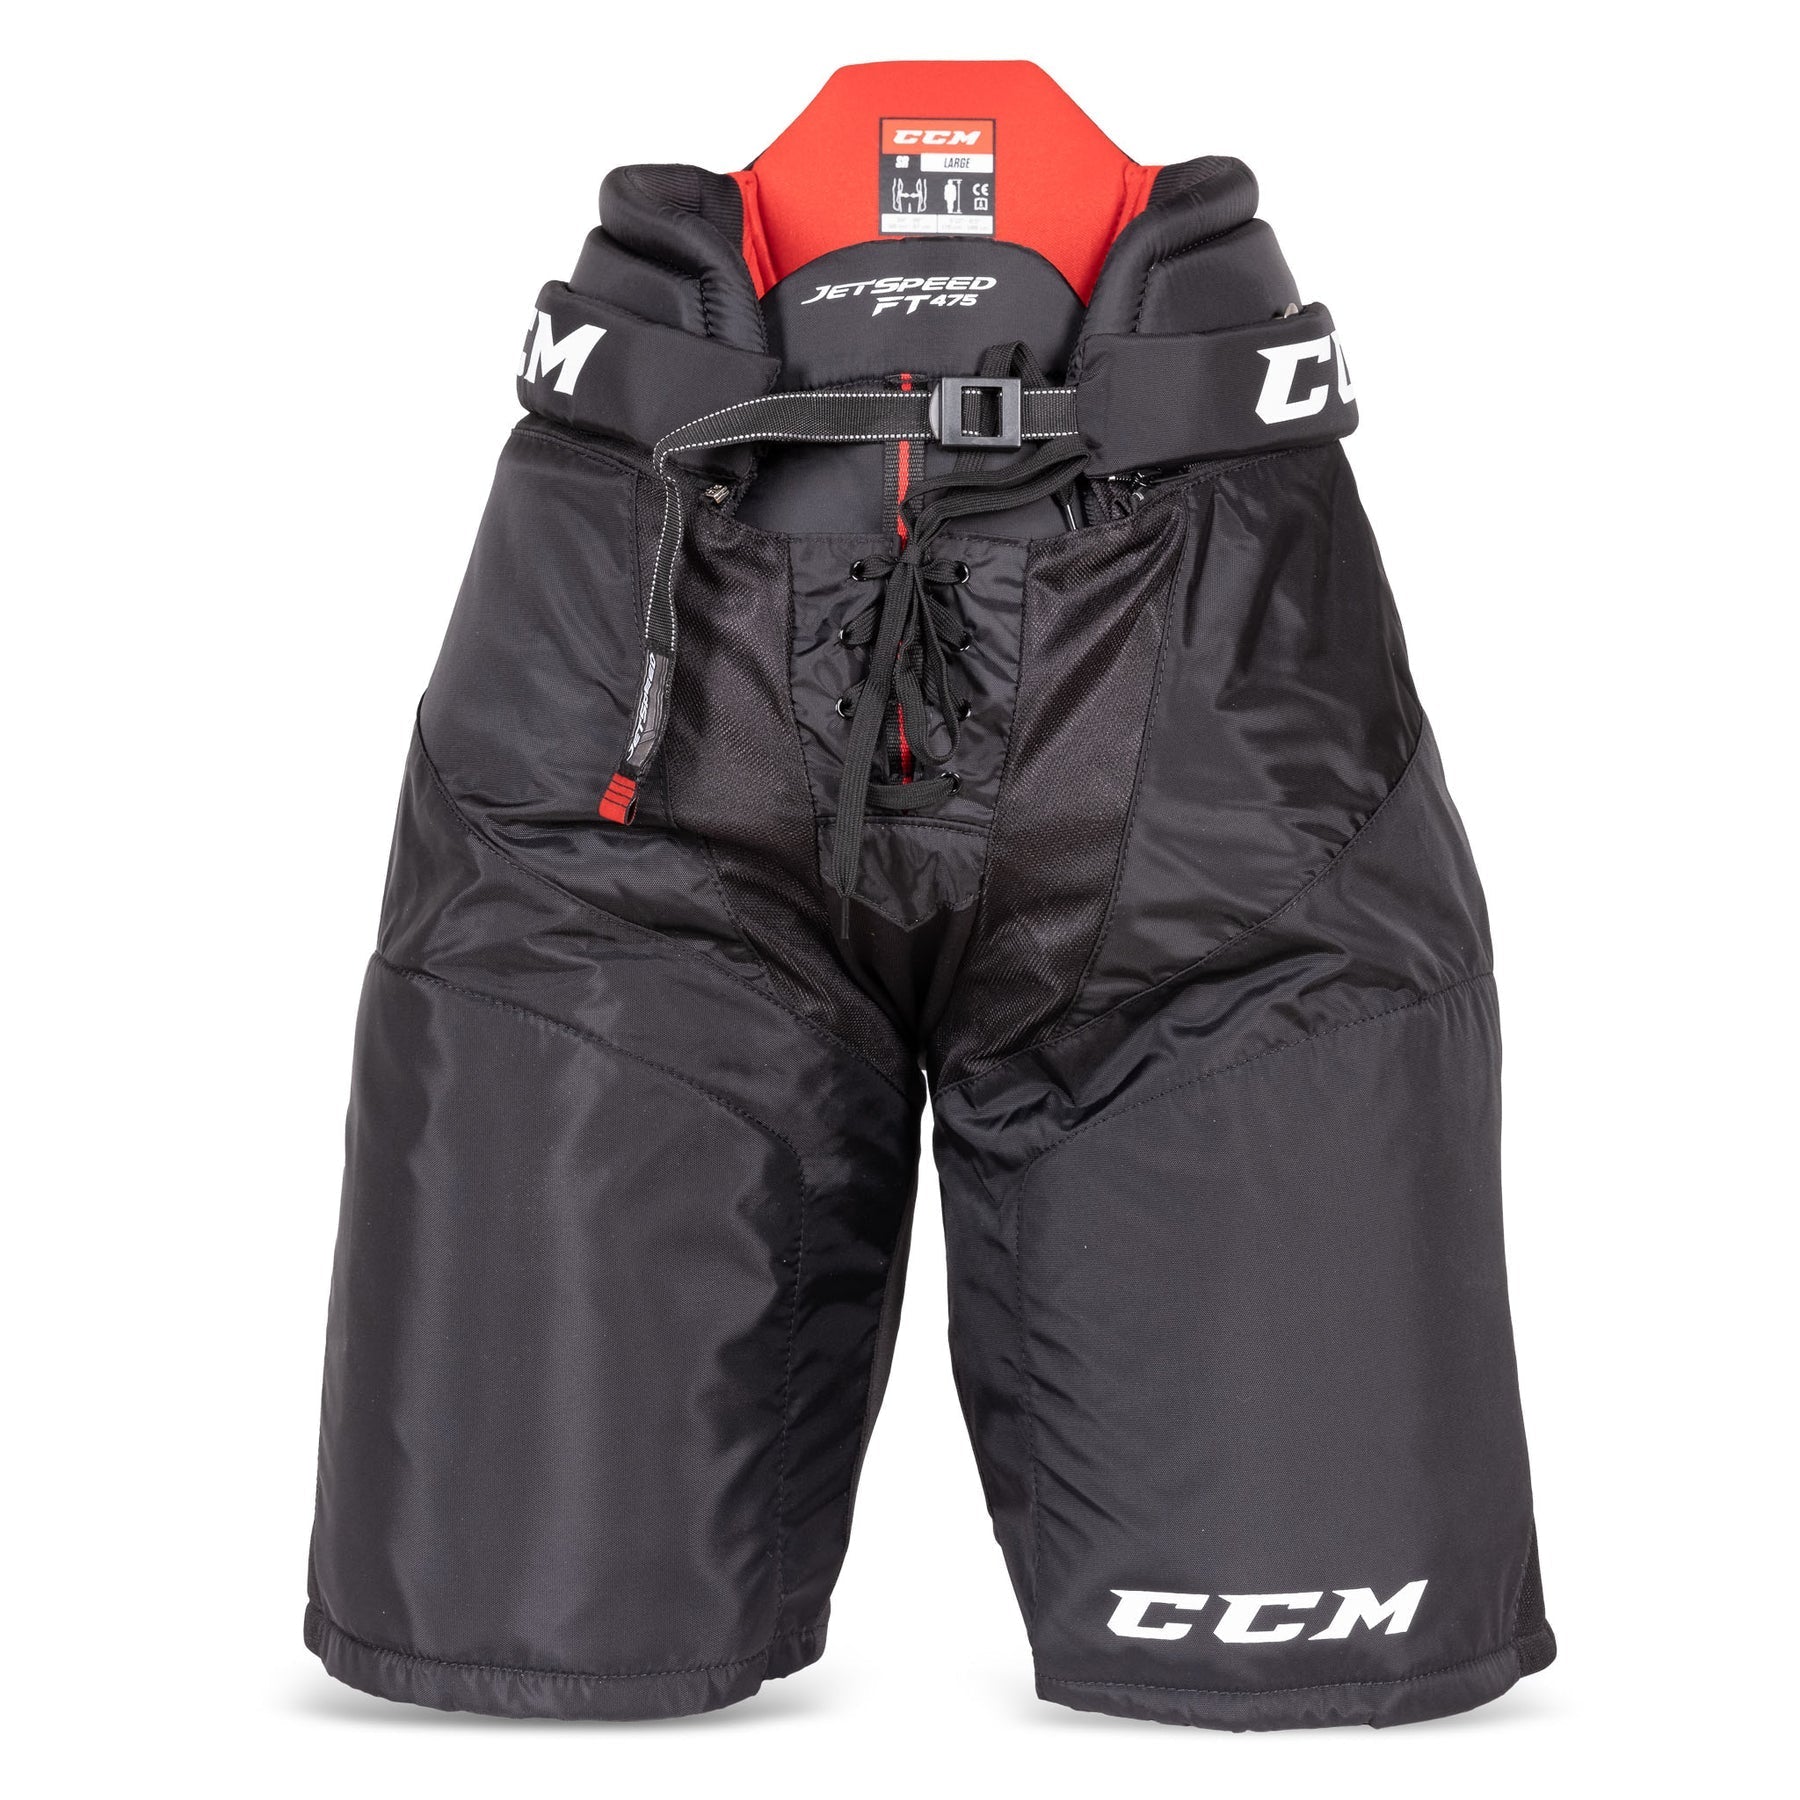 Ccm Jetspeed 475 Senior Hockey Pants-Ccm-Sports Replay - Sports Excellence